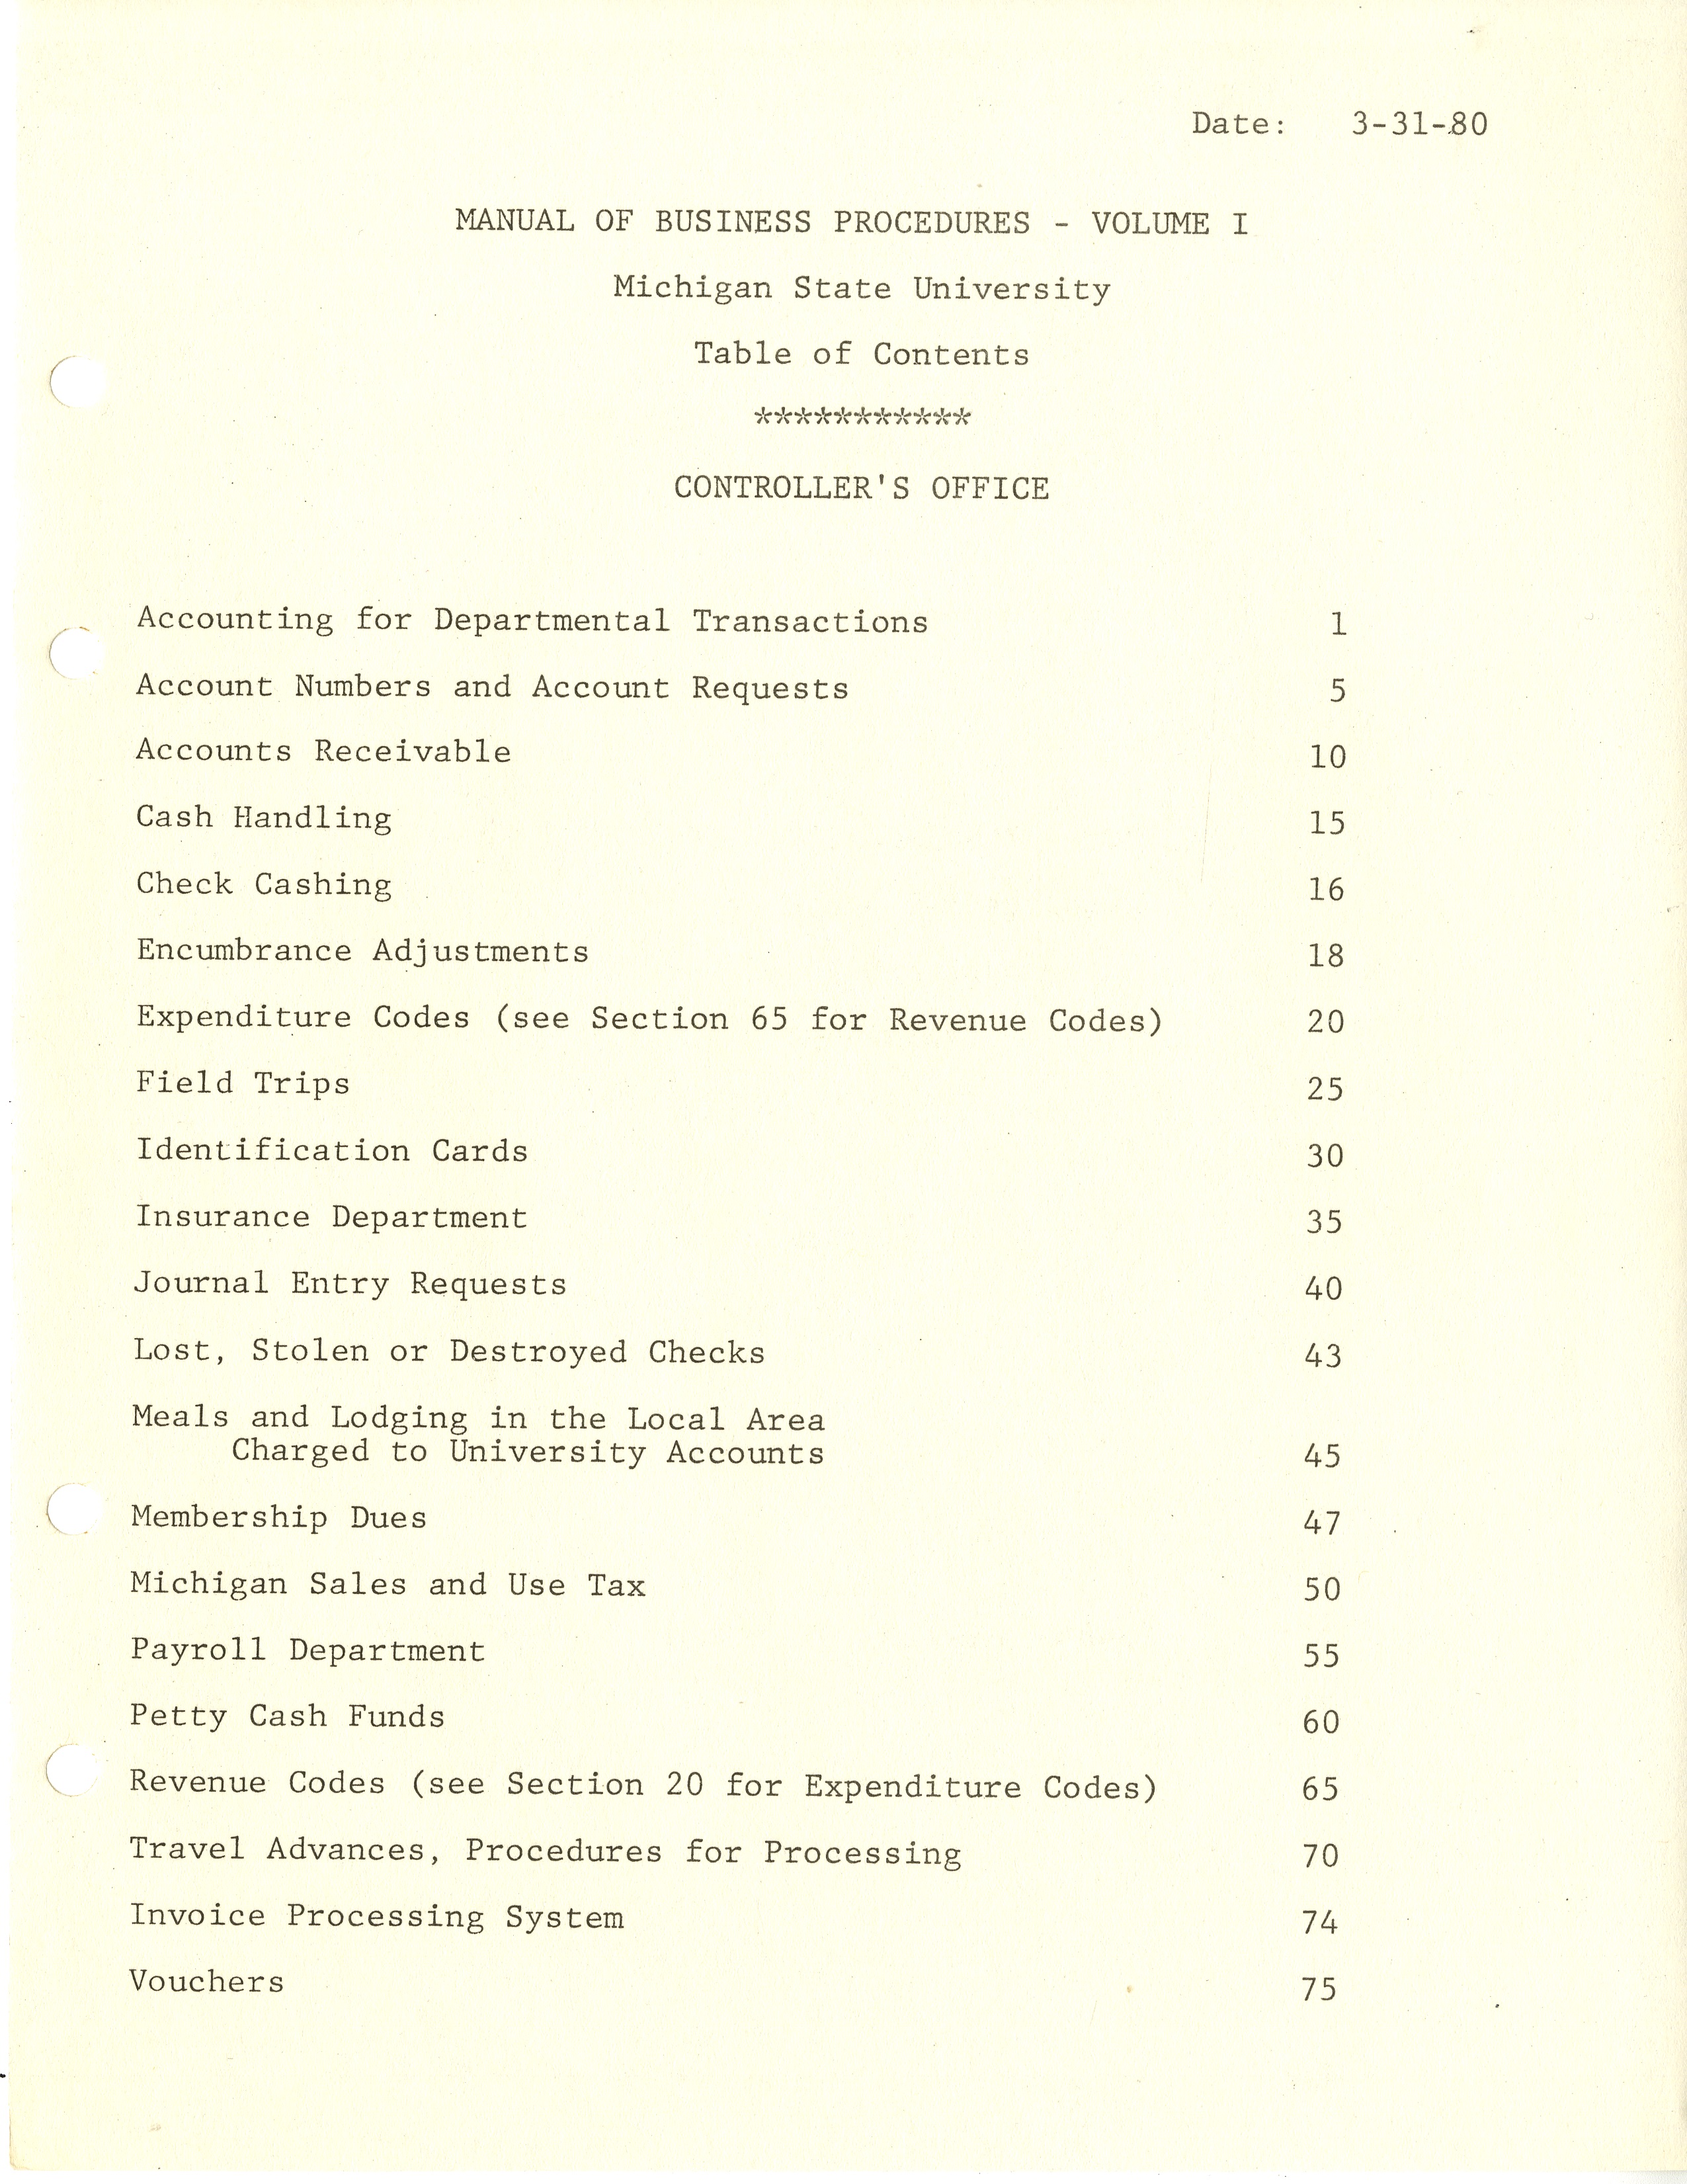 MSU Manual of Business Procedures, 1980